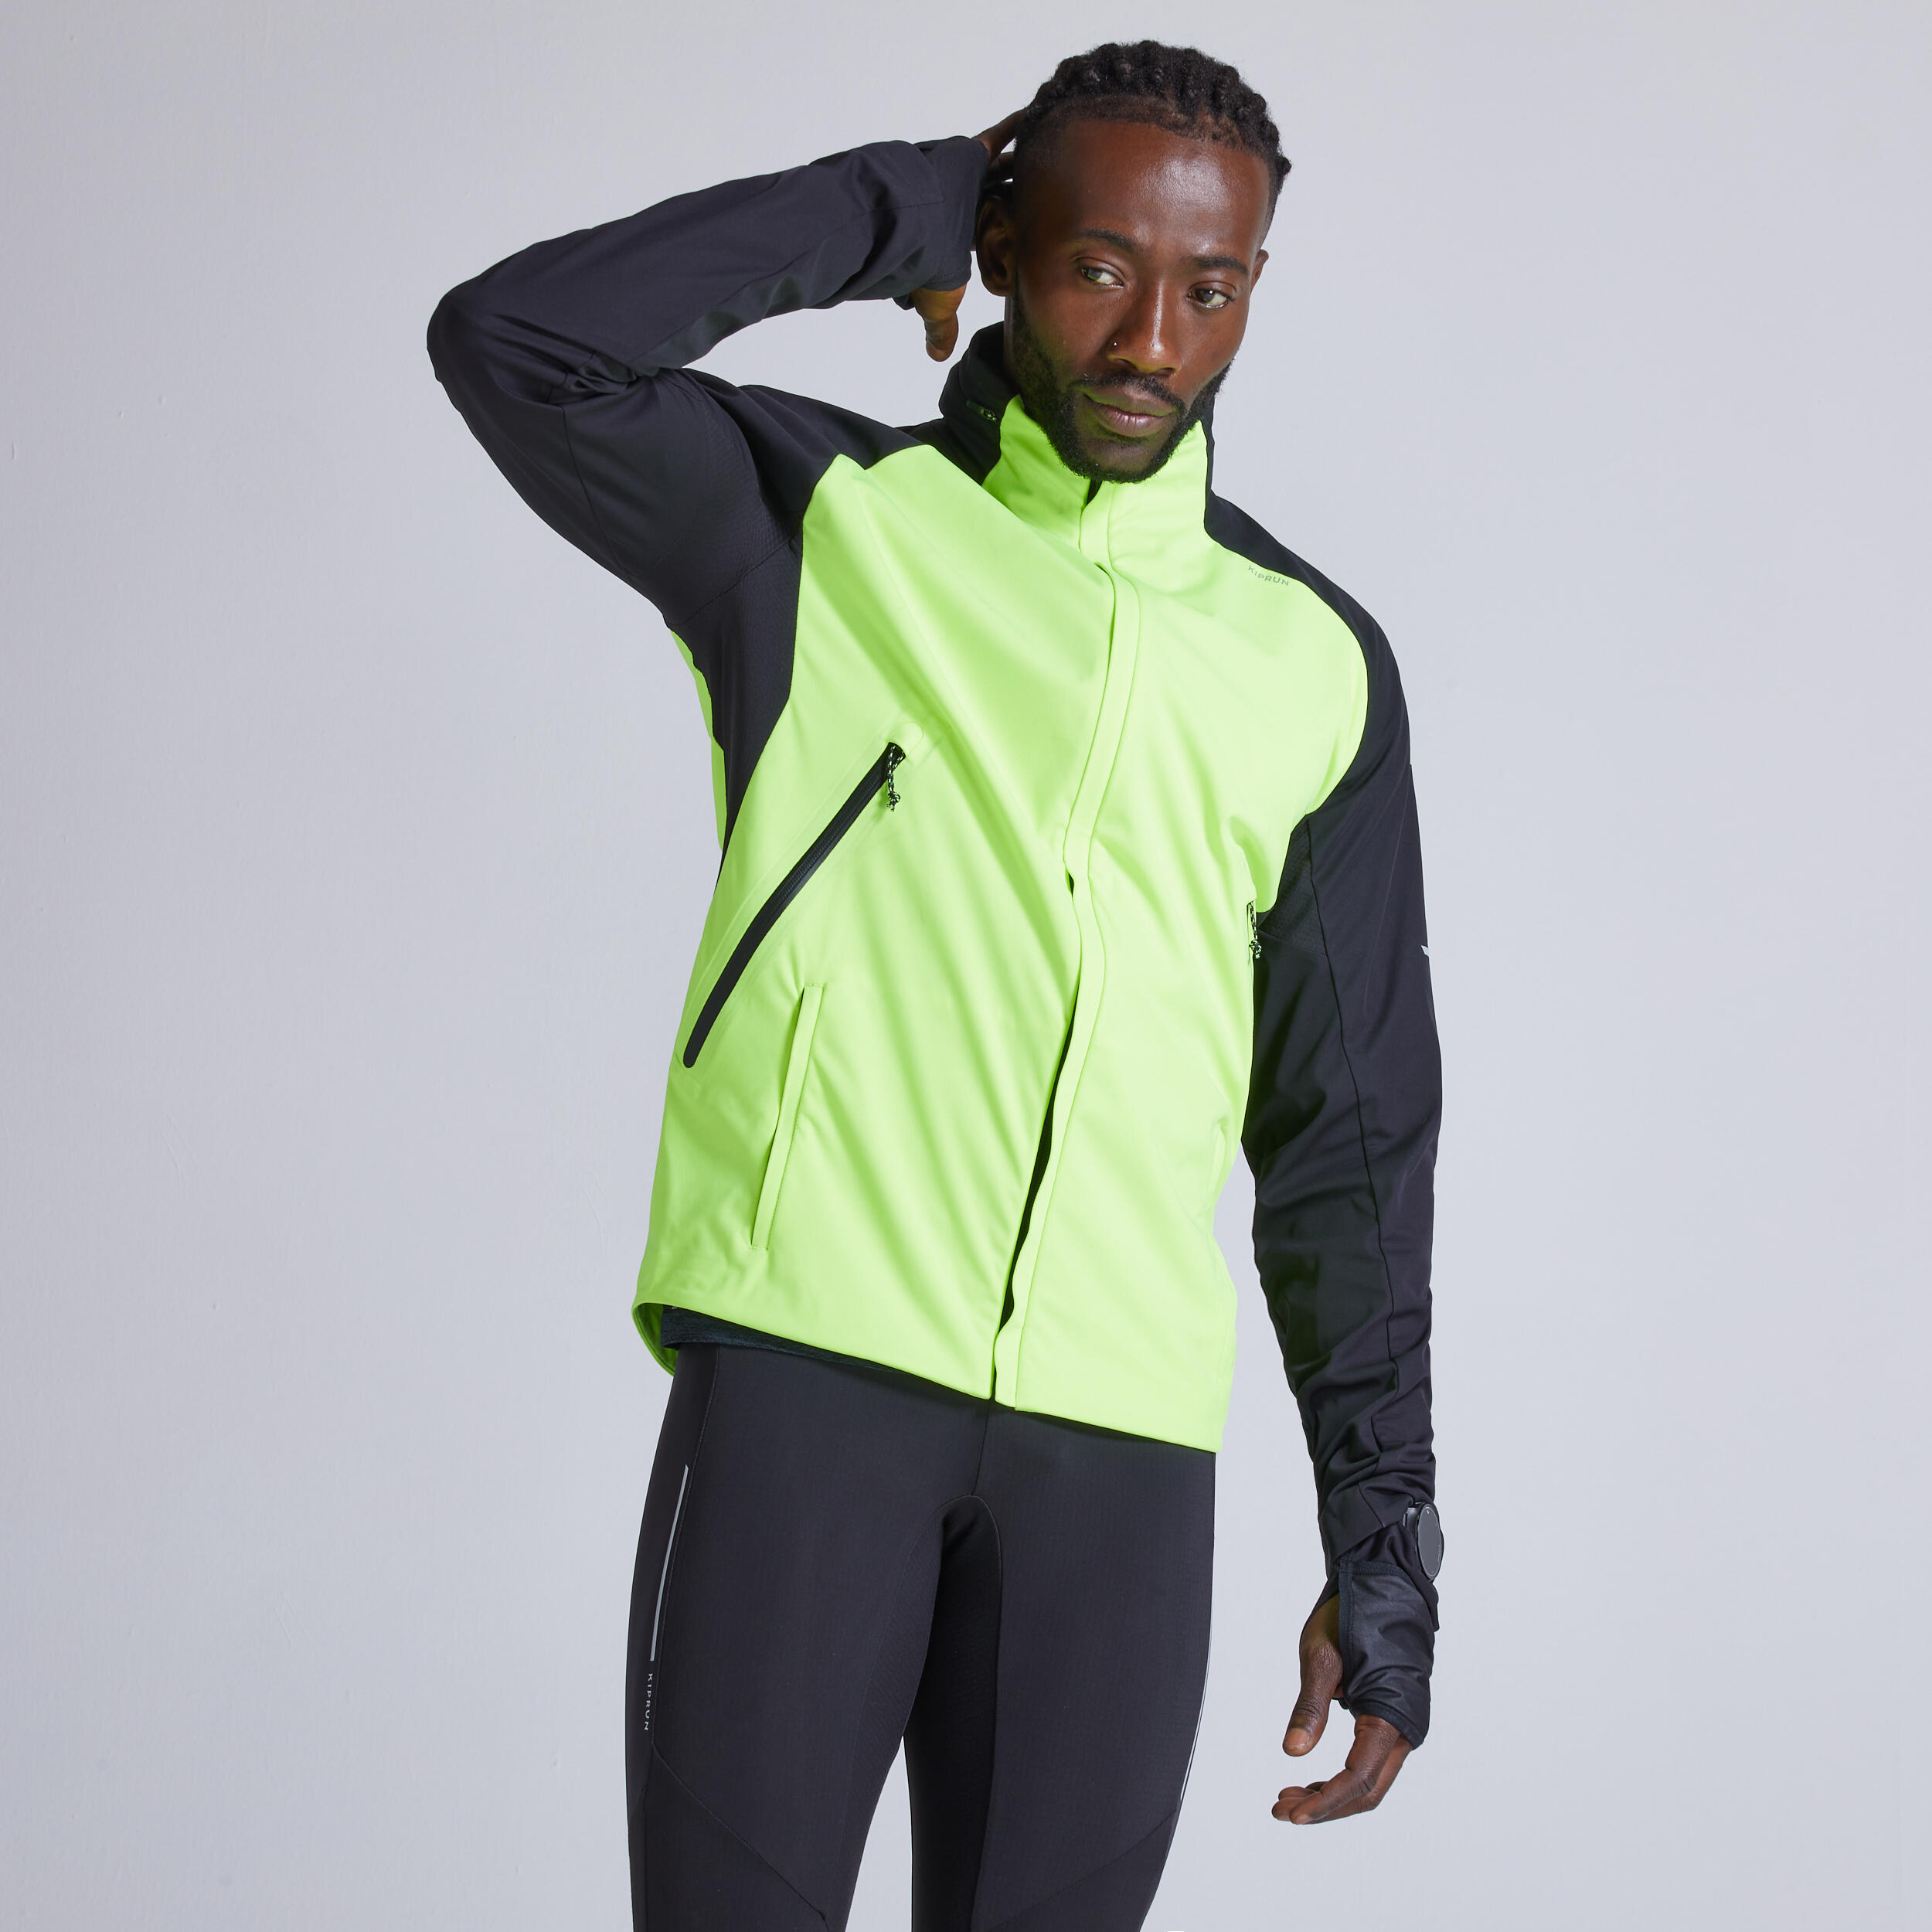 Kalenji Kiprun Warm Men's Running Tights (Black/Yellow) 